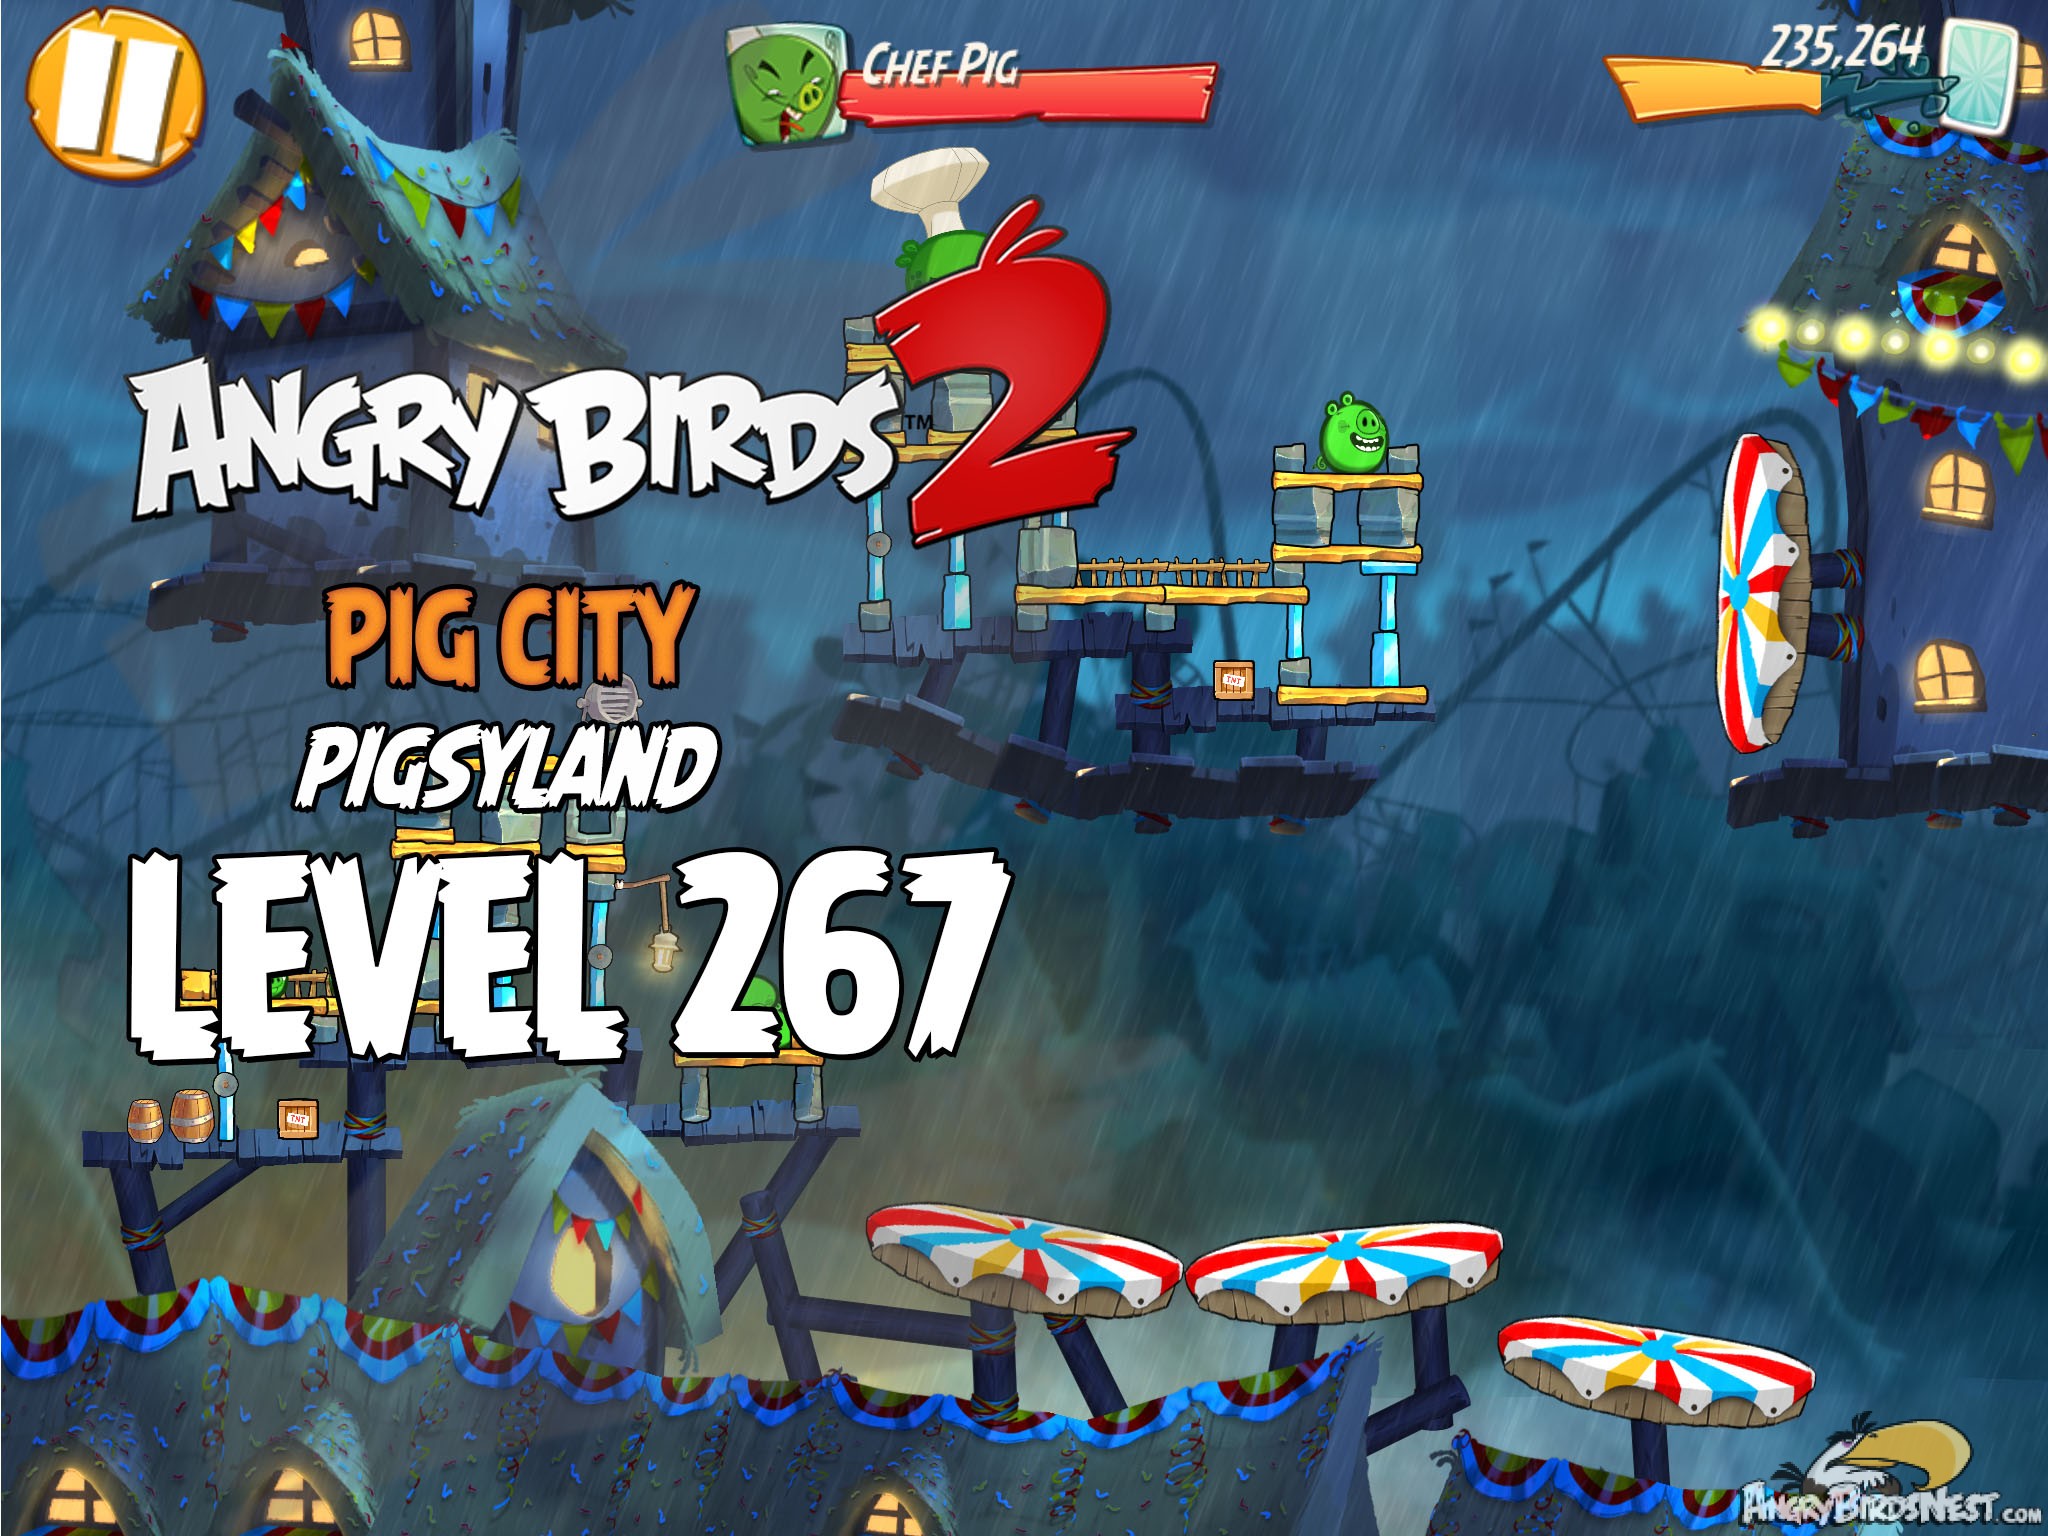 Angry Birds 2 Pig City Pigsyland Level 267